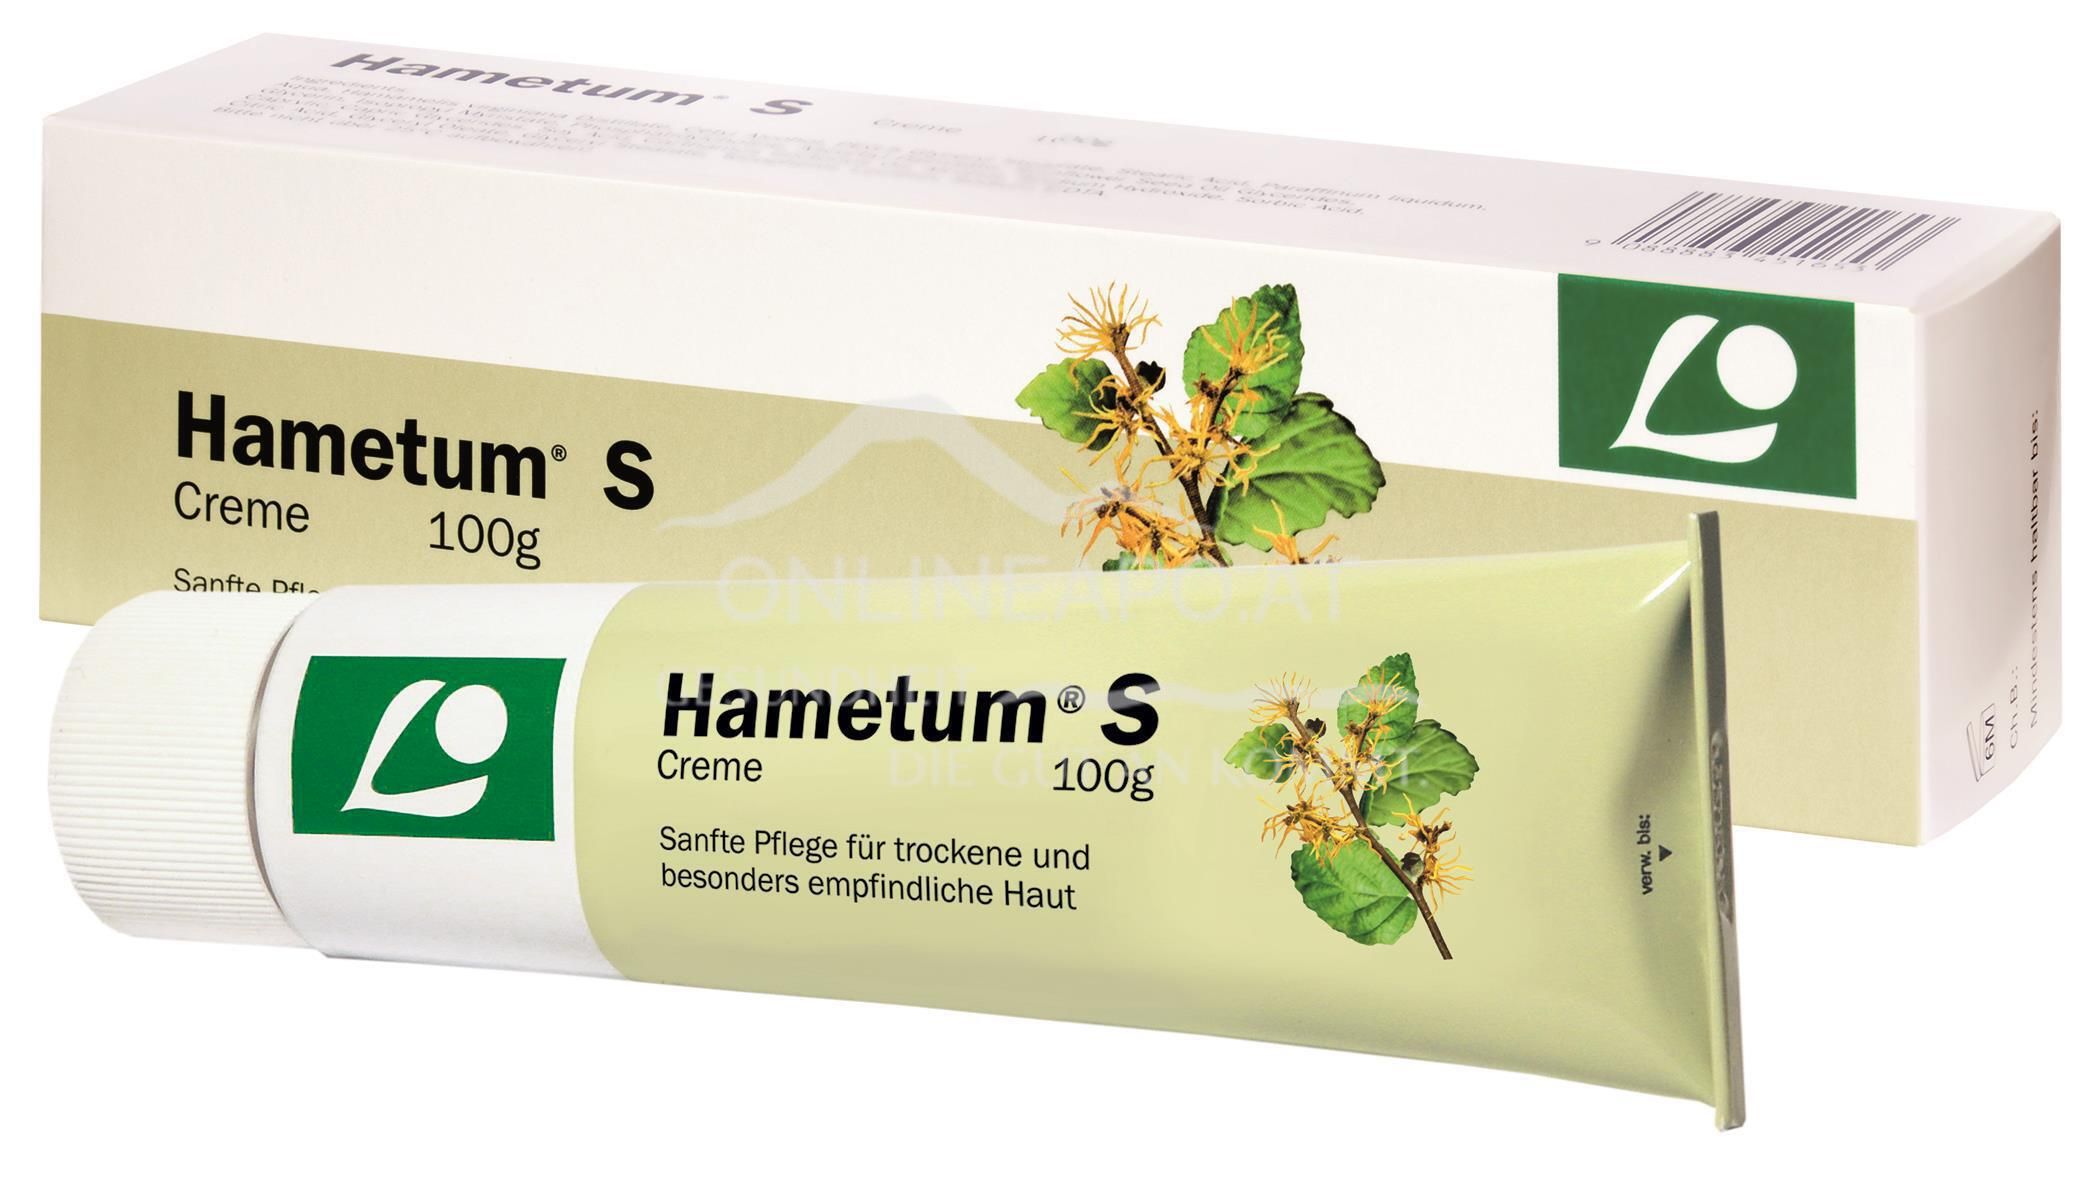 Hametum® S Creme